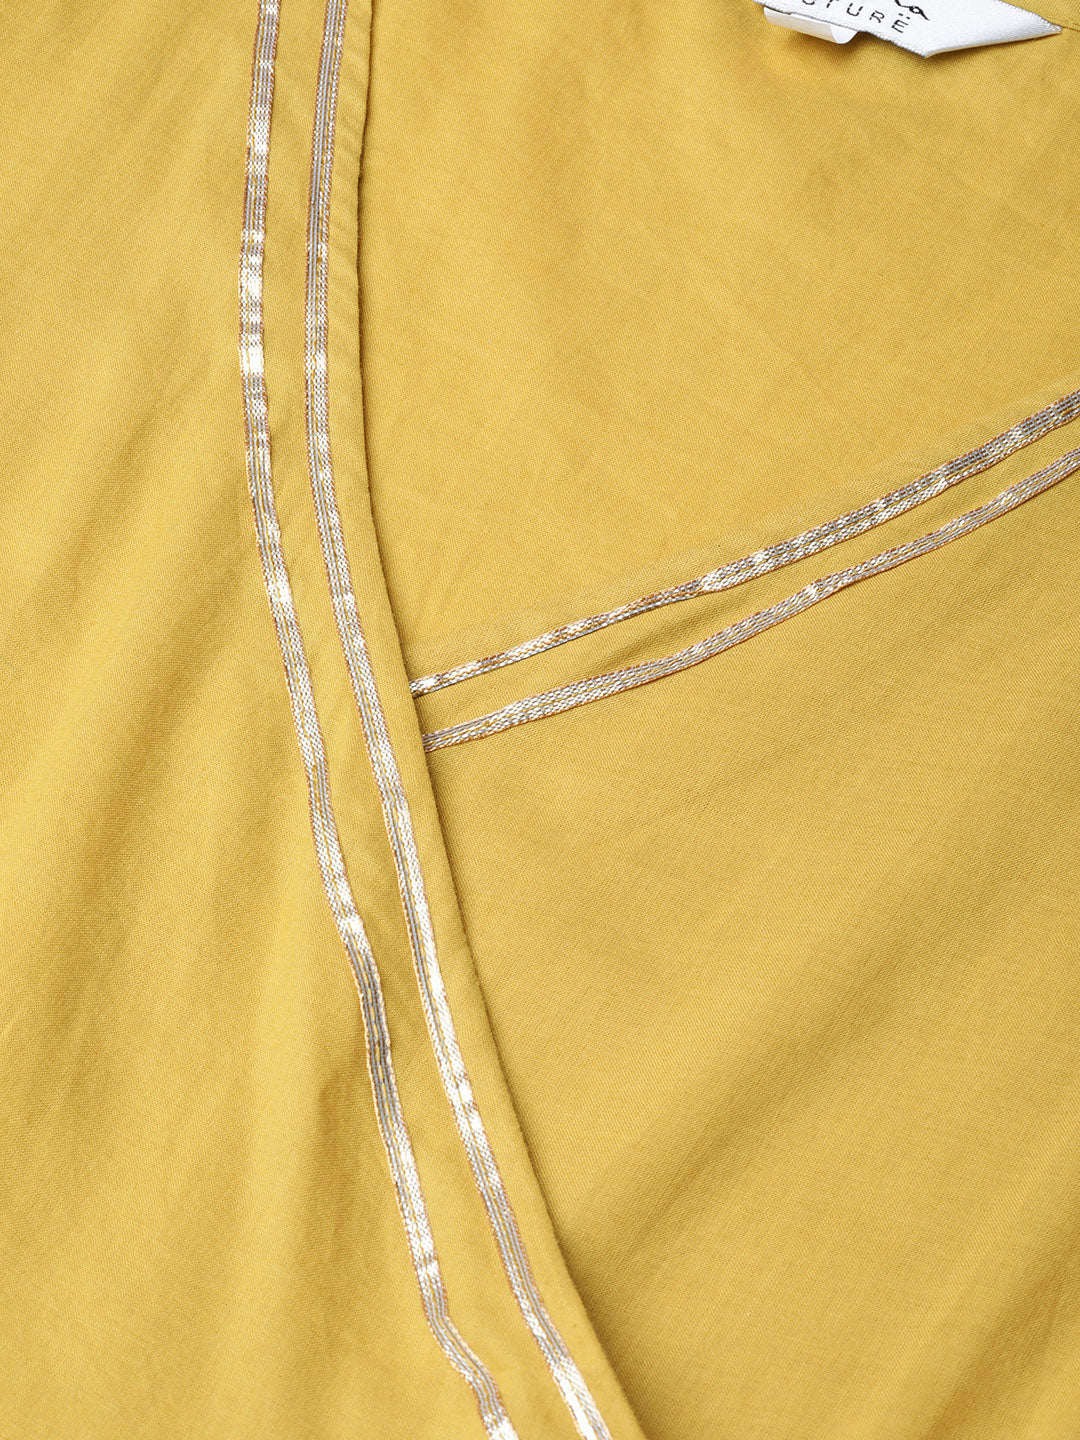 Mustard Yellow Solid Gotta Detailing Kurta & Mustard Gotta Lace Skirt